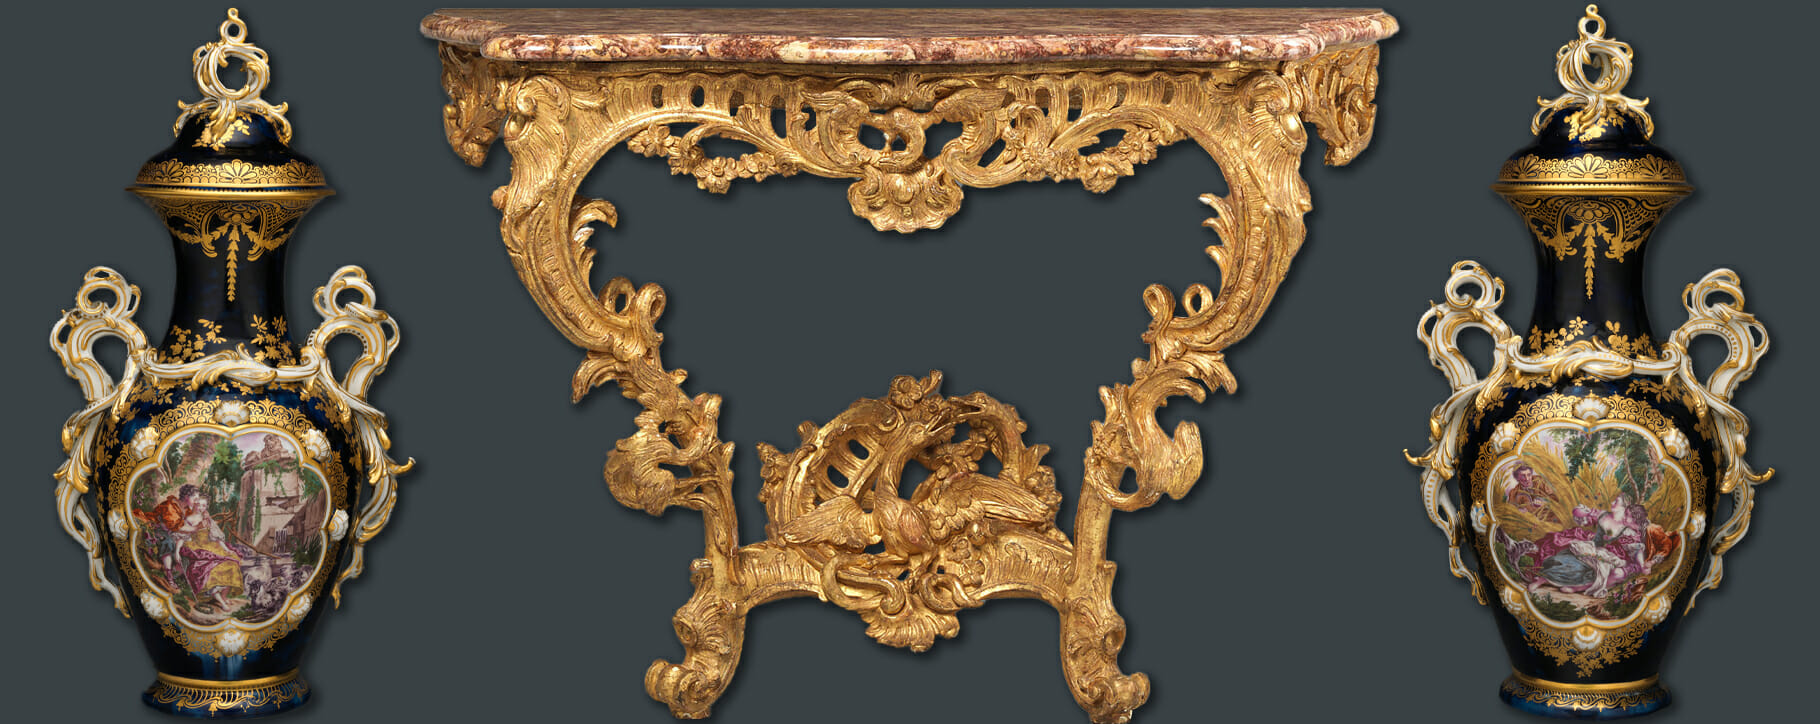 Rococo gilt console table vases